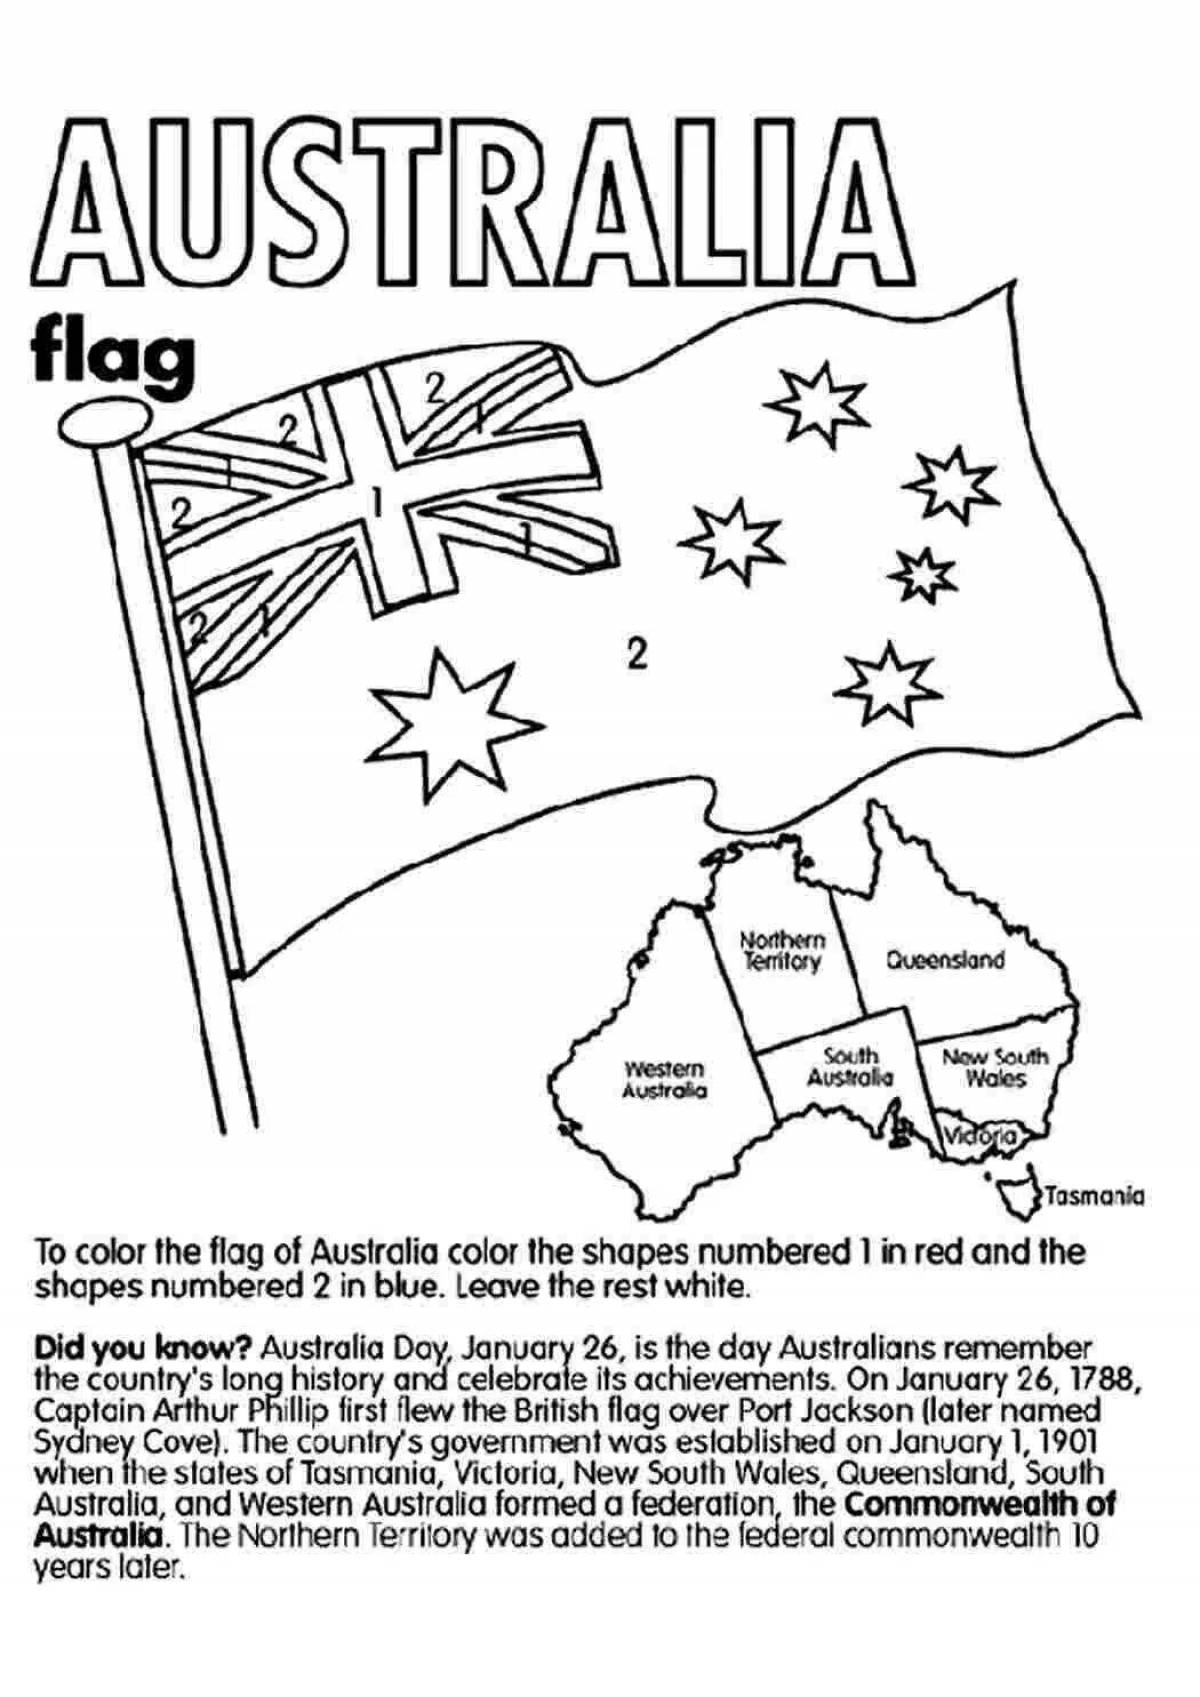 Australia shiny map coloring page